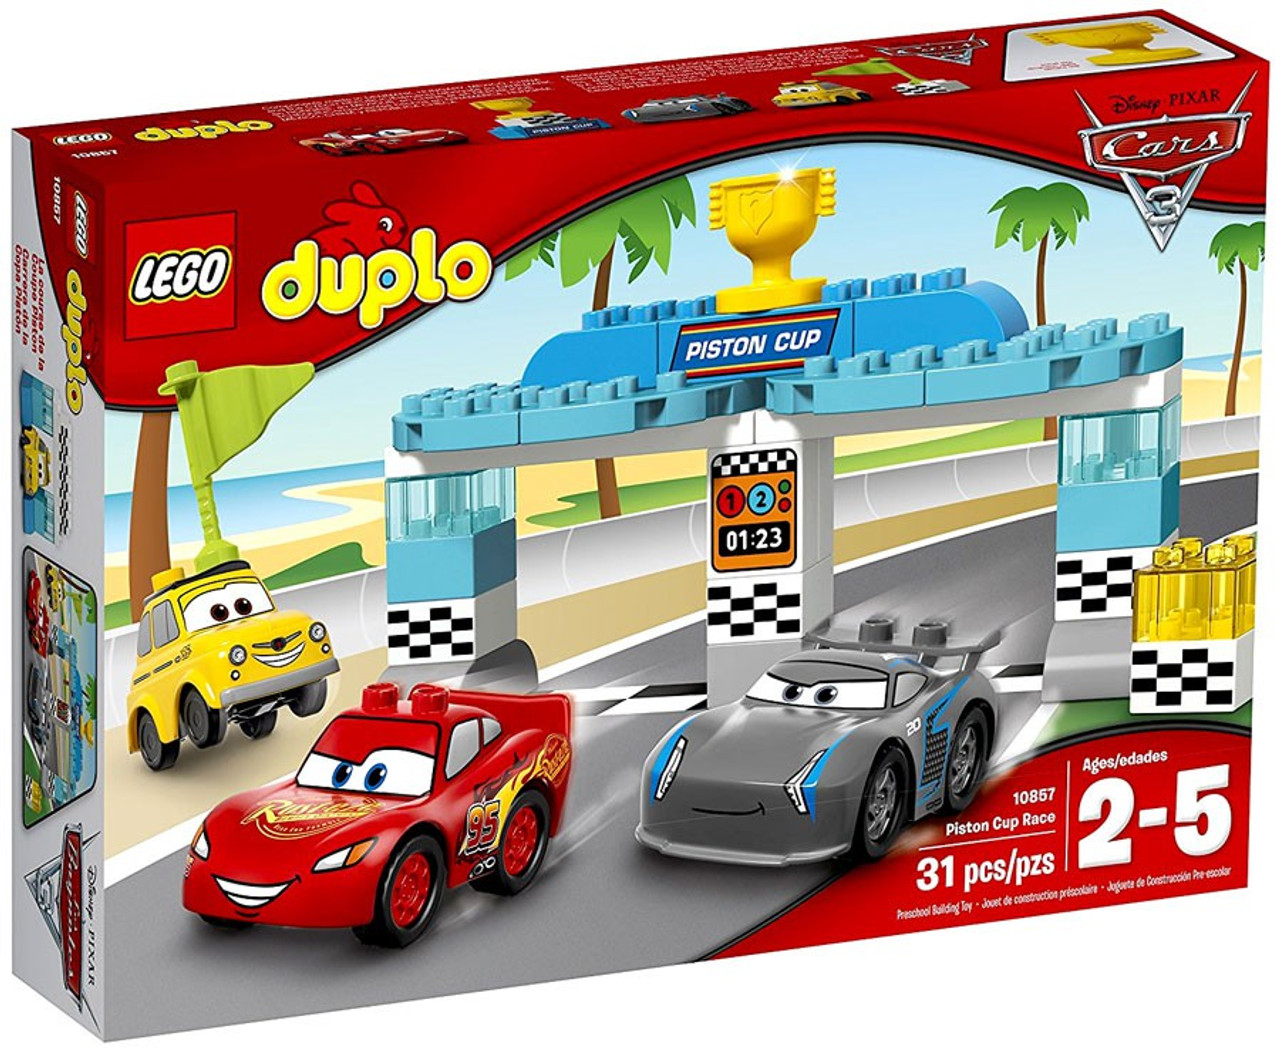 LEGO Disney Cars Cars 3 Duplo Piston Cup Race Set 10857